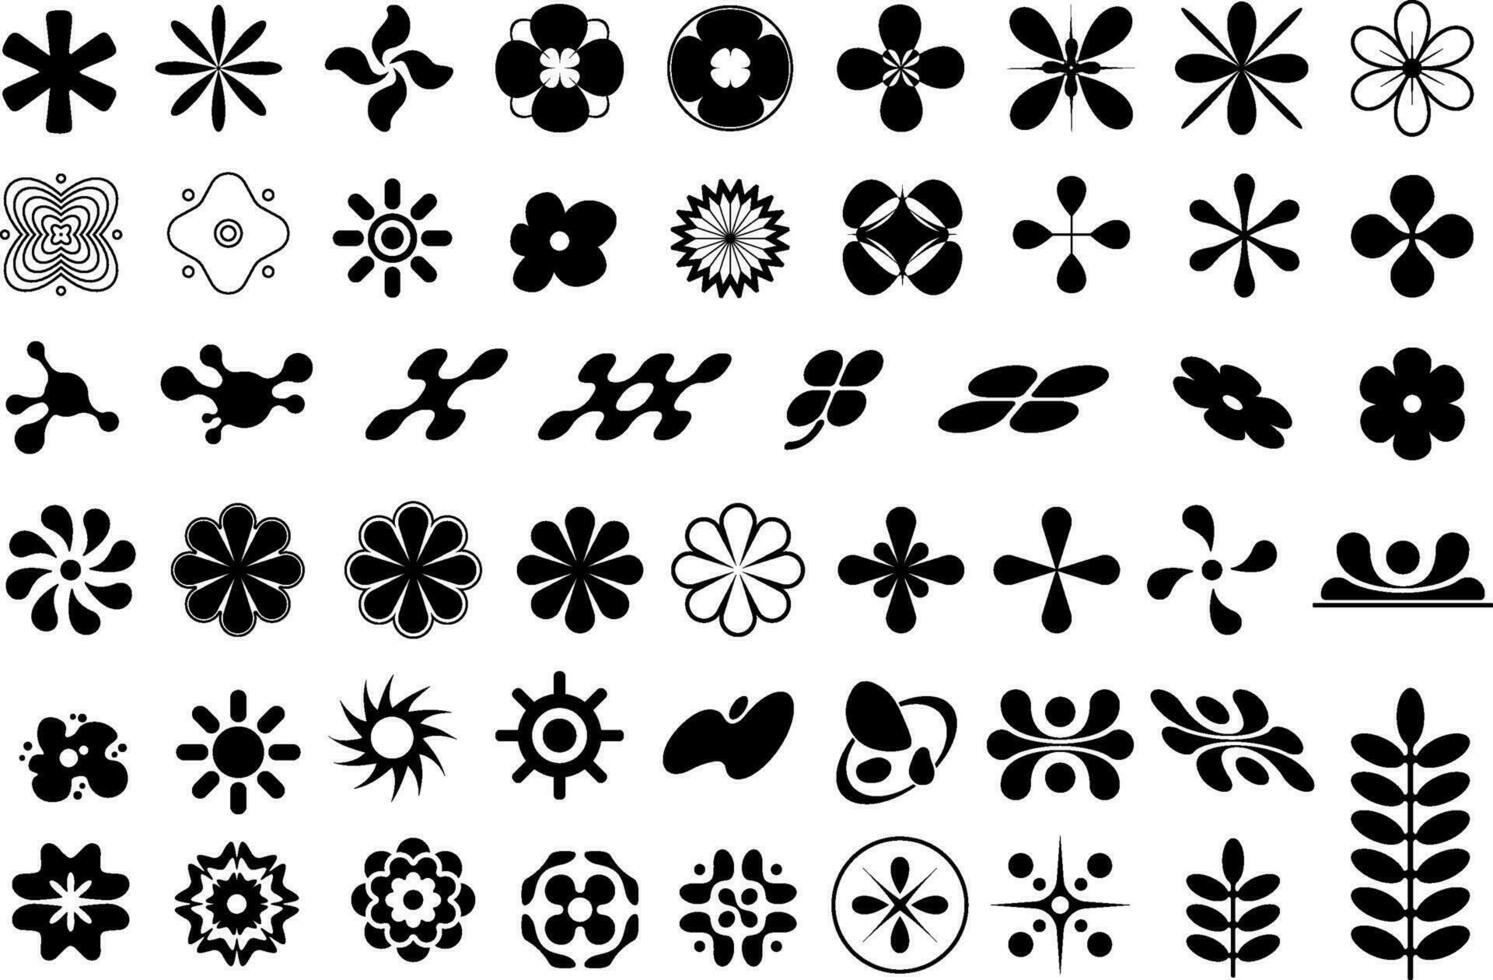 Retro futuristic floral mid century modern design logo icons vector